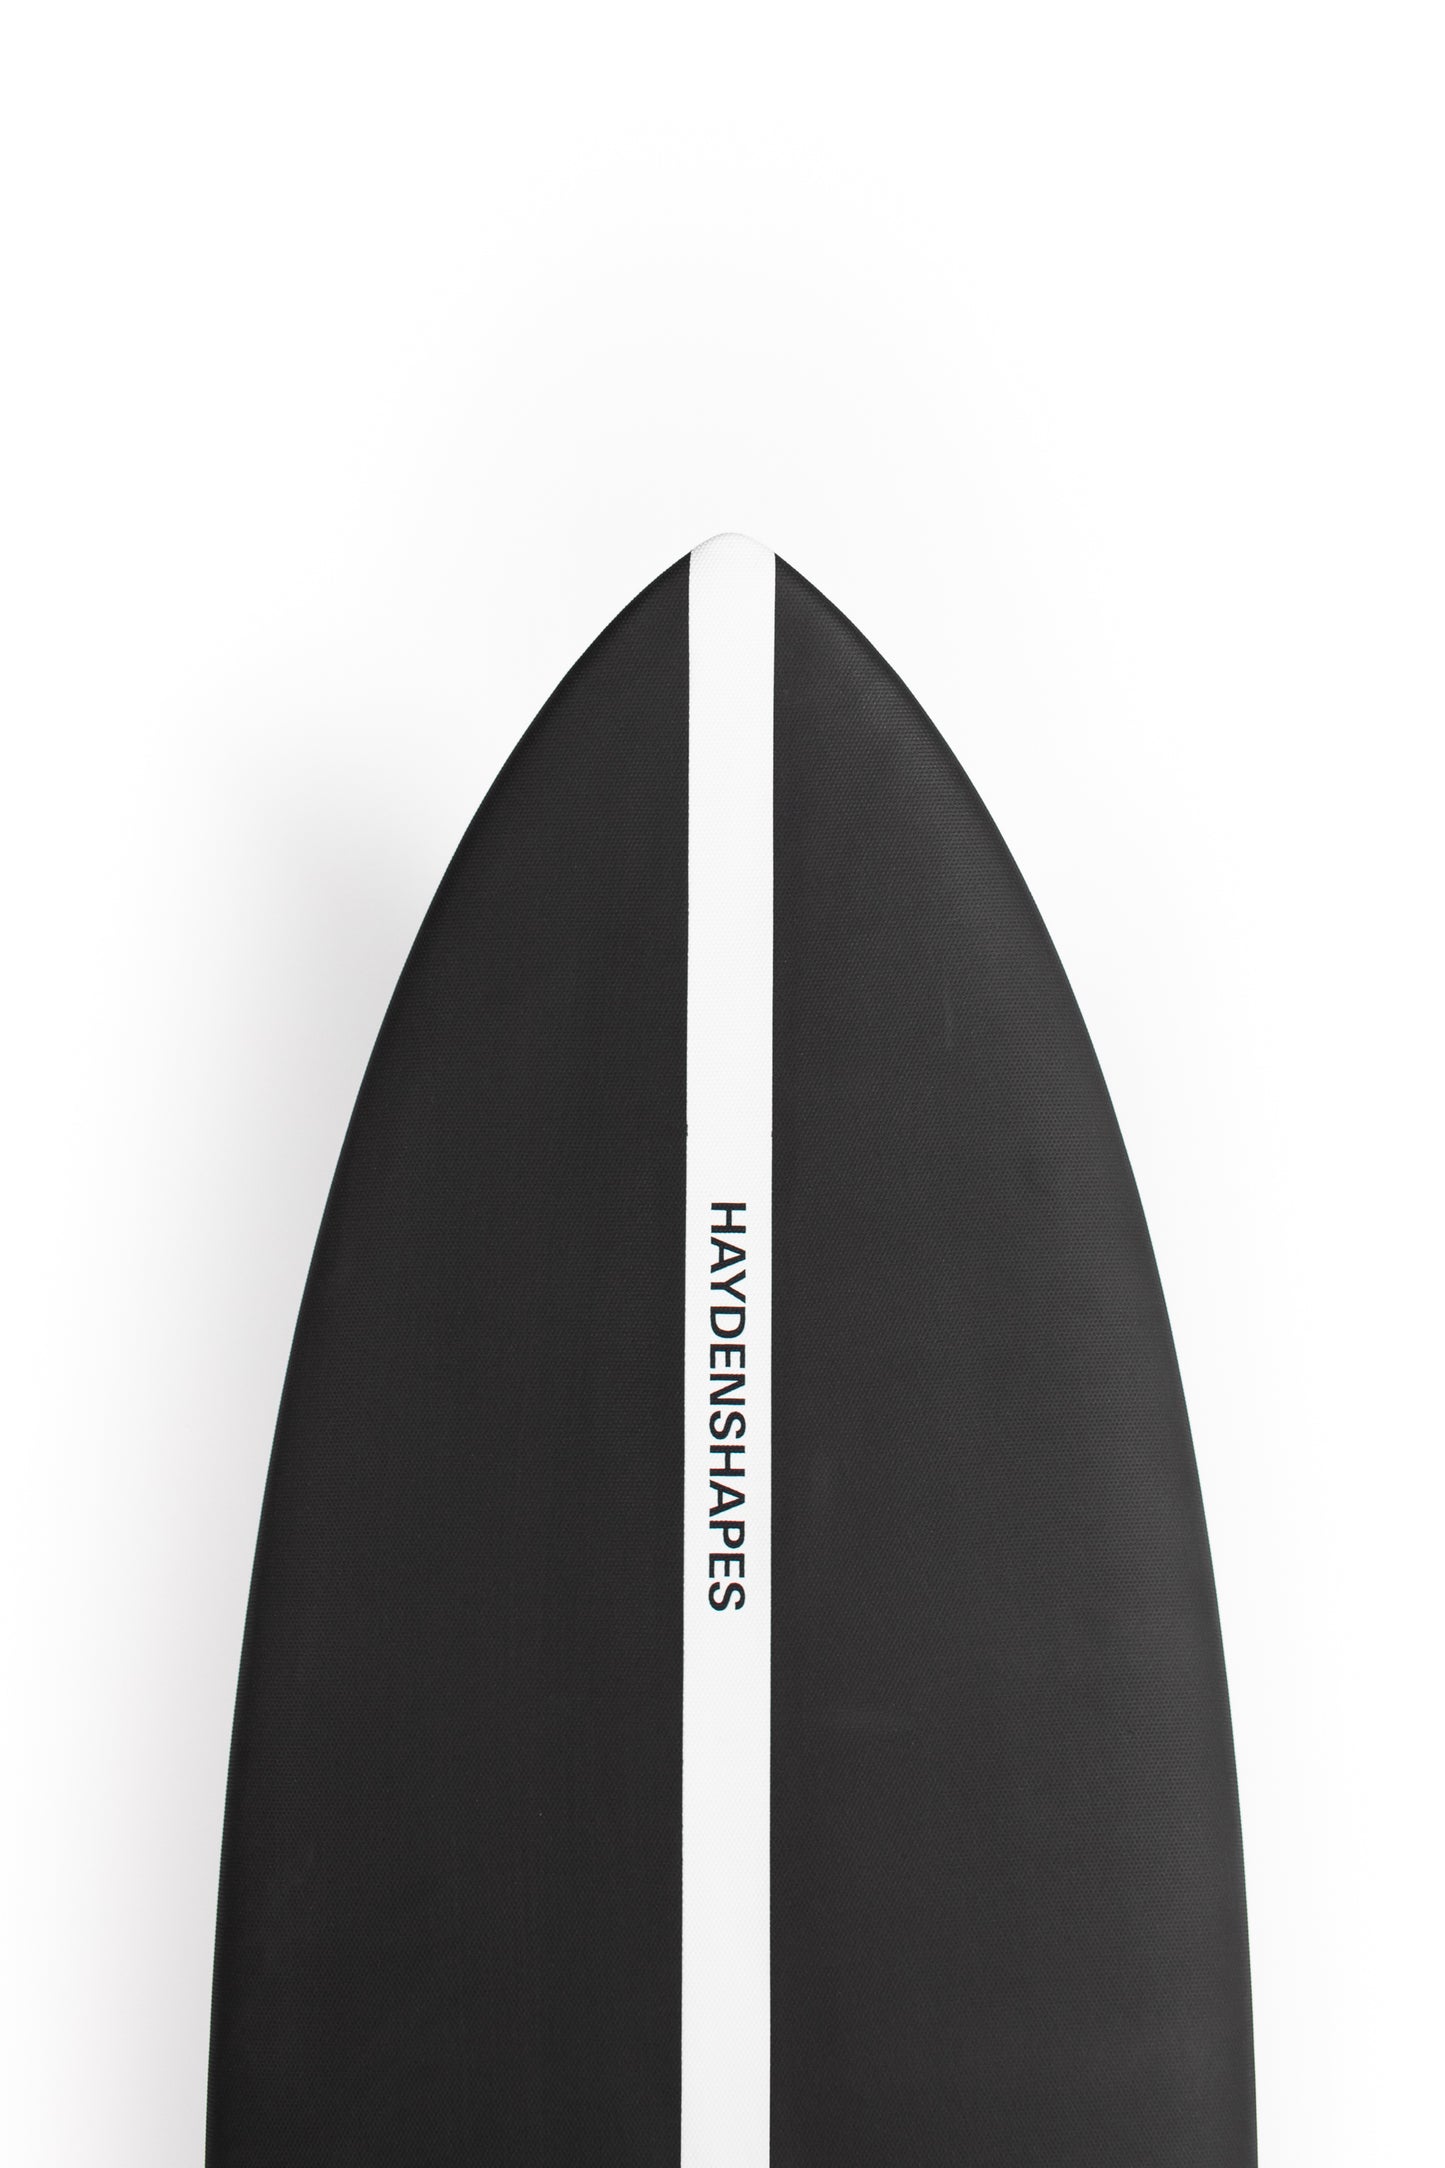 
                  
                    HaydenShapes Surfboard - HYPTO KRYPTO SOFT - 6'8" x 21 1/2" x 3 1/4" x 52.73L
                  
                